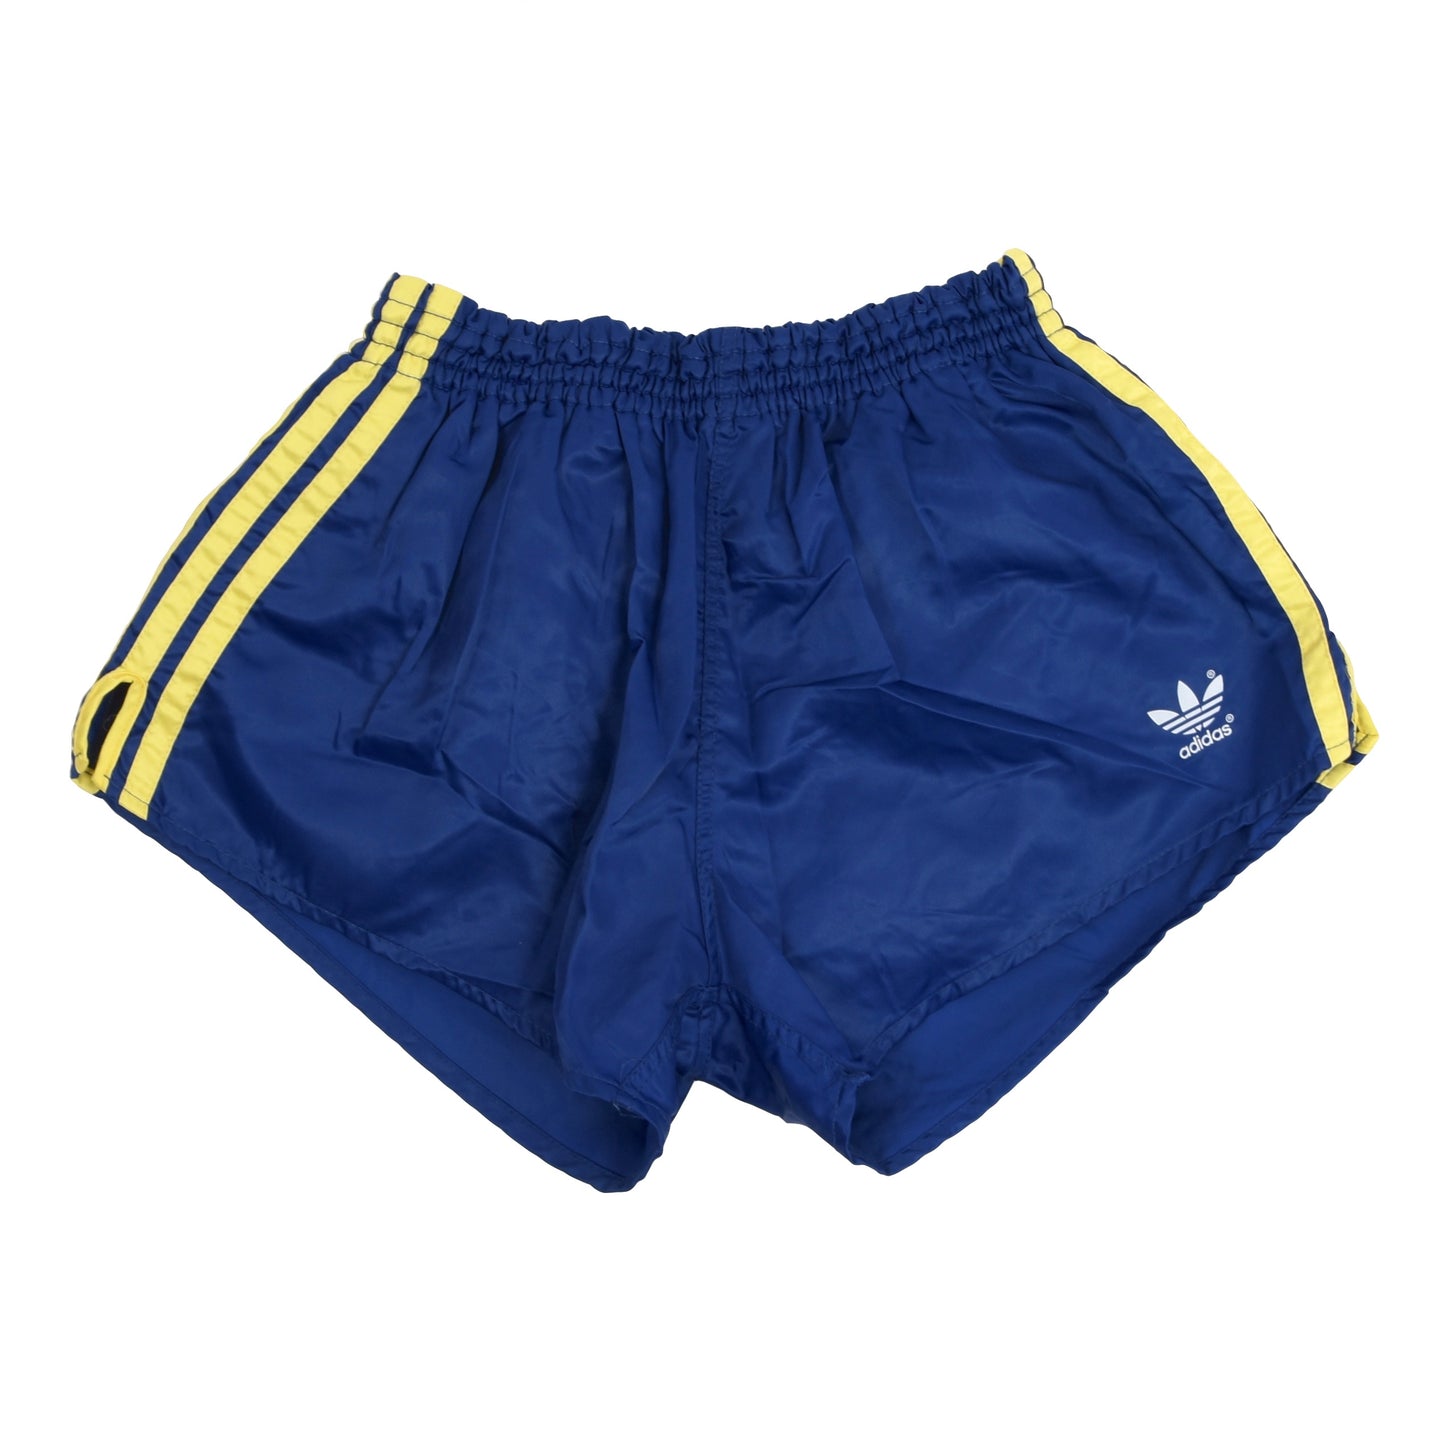 Vintage Adidas Sprinter Shorts Size D6 - Blue/Yellow